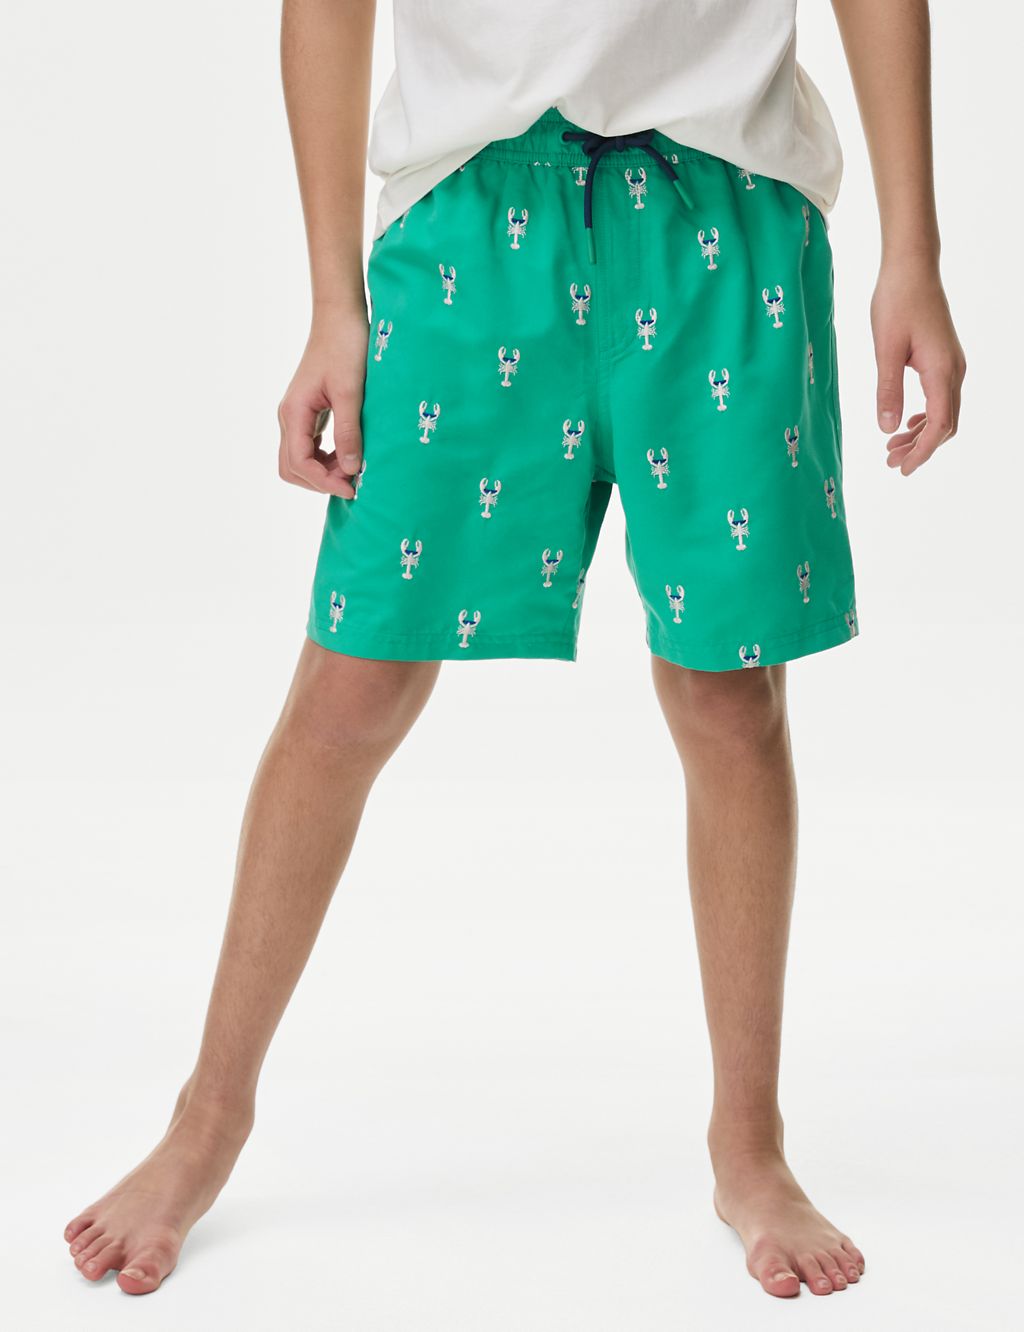 Flamingo Embroidered Swim Shorts (6-16 Yrs) 2 of 6